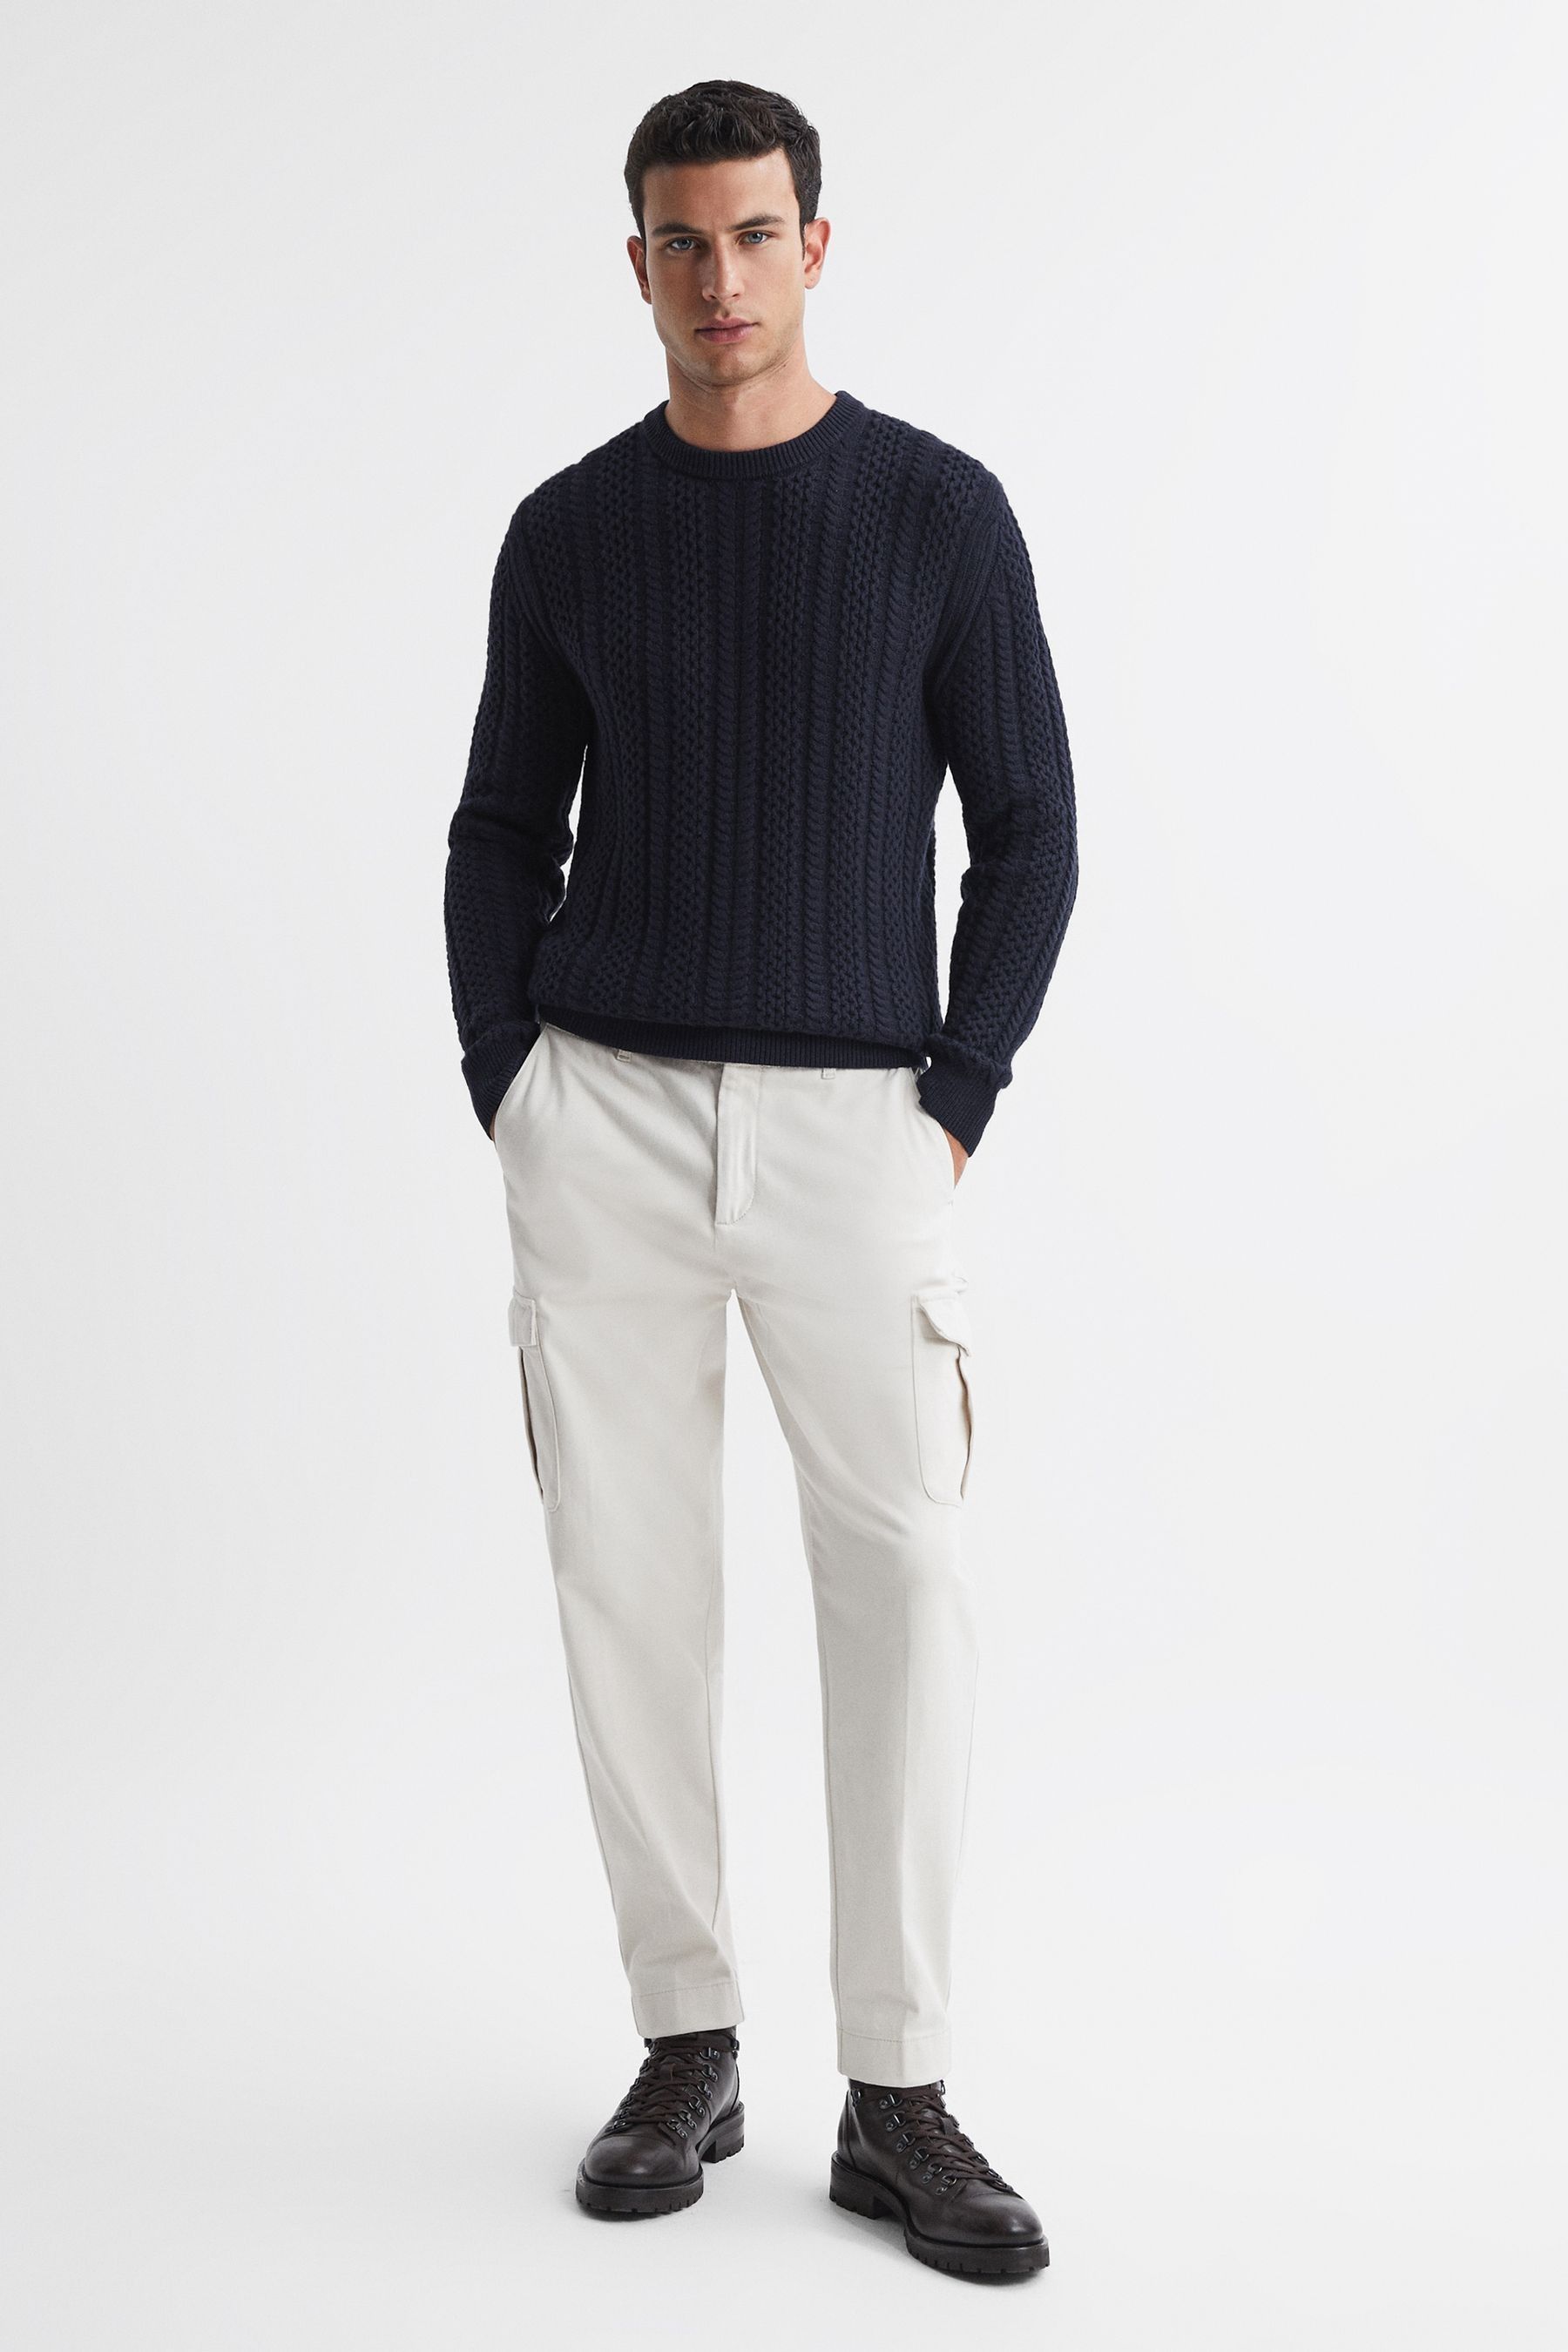 Reiss Arlington - Navy Slim Fit Wool-cotton Cable Knit Jumper, Xs